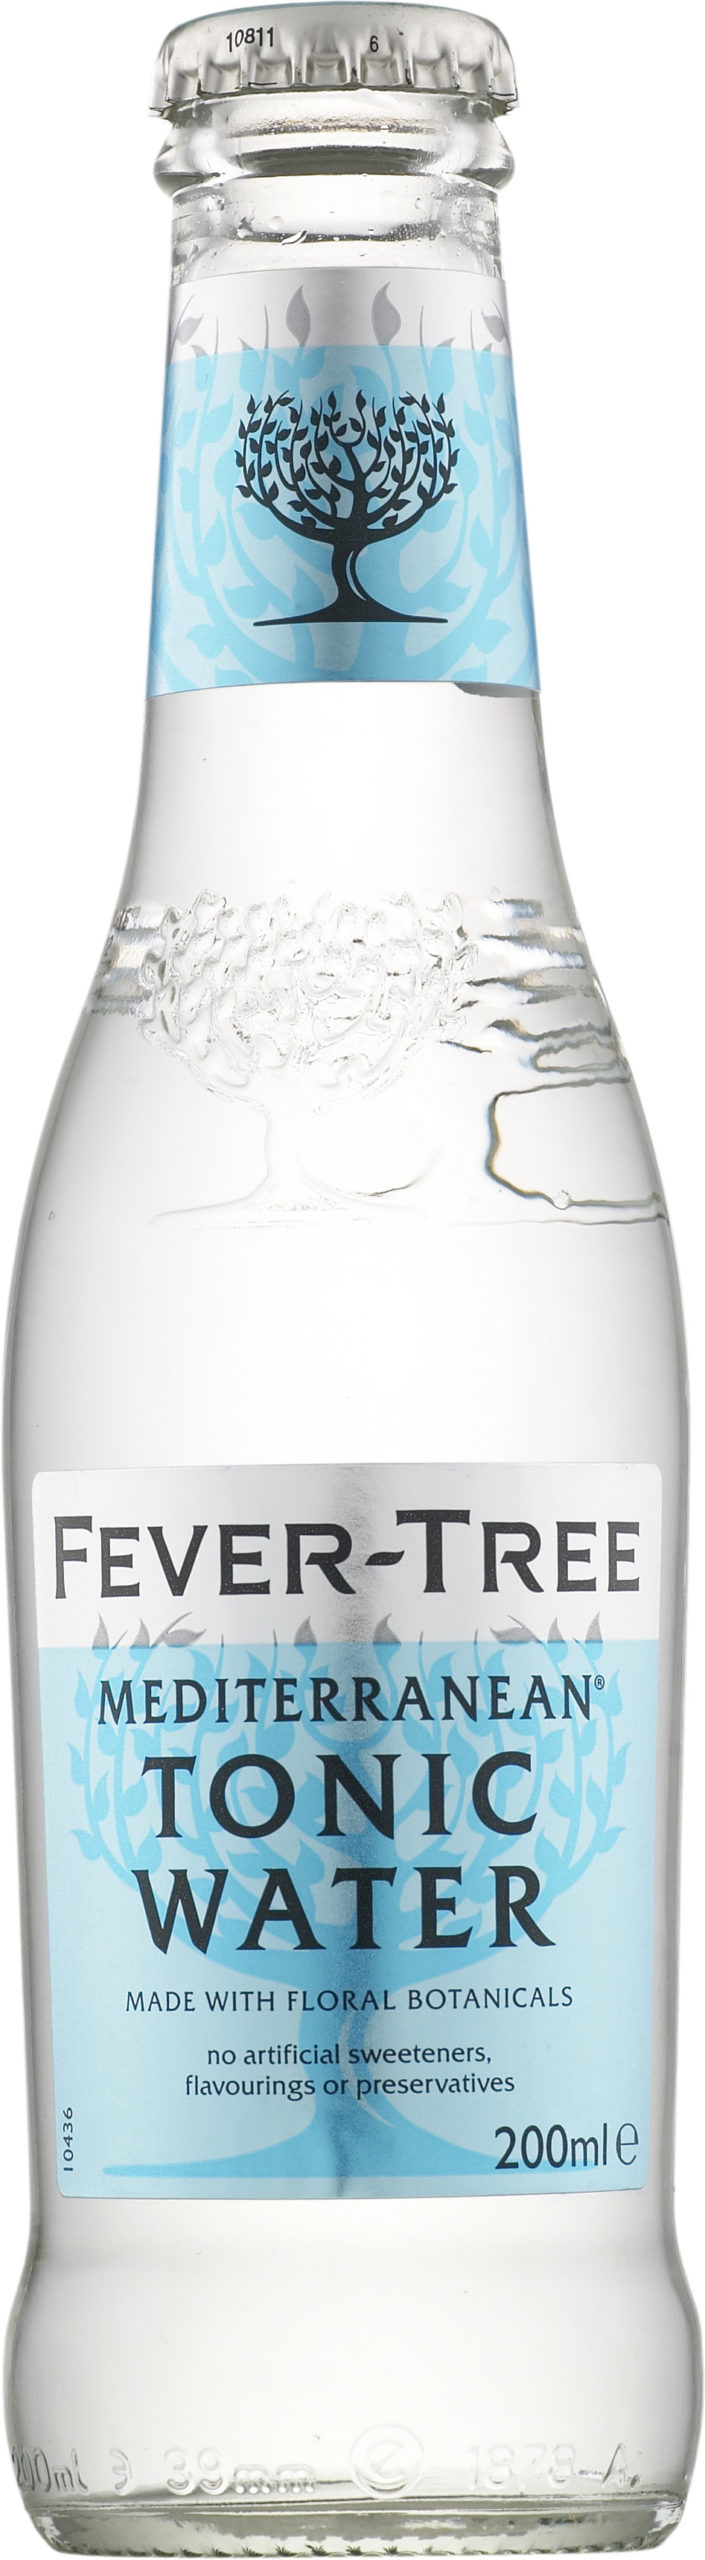 Fever-Tree Fever-Tree Mediterranean Tonic Water